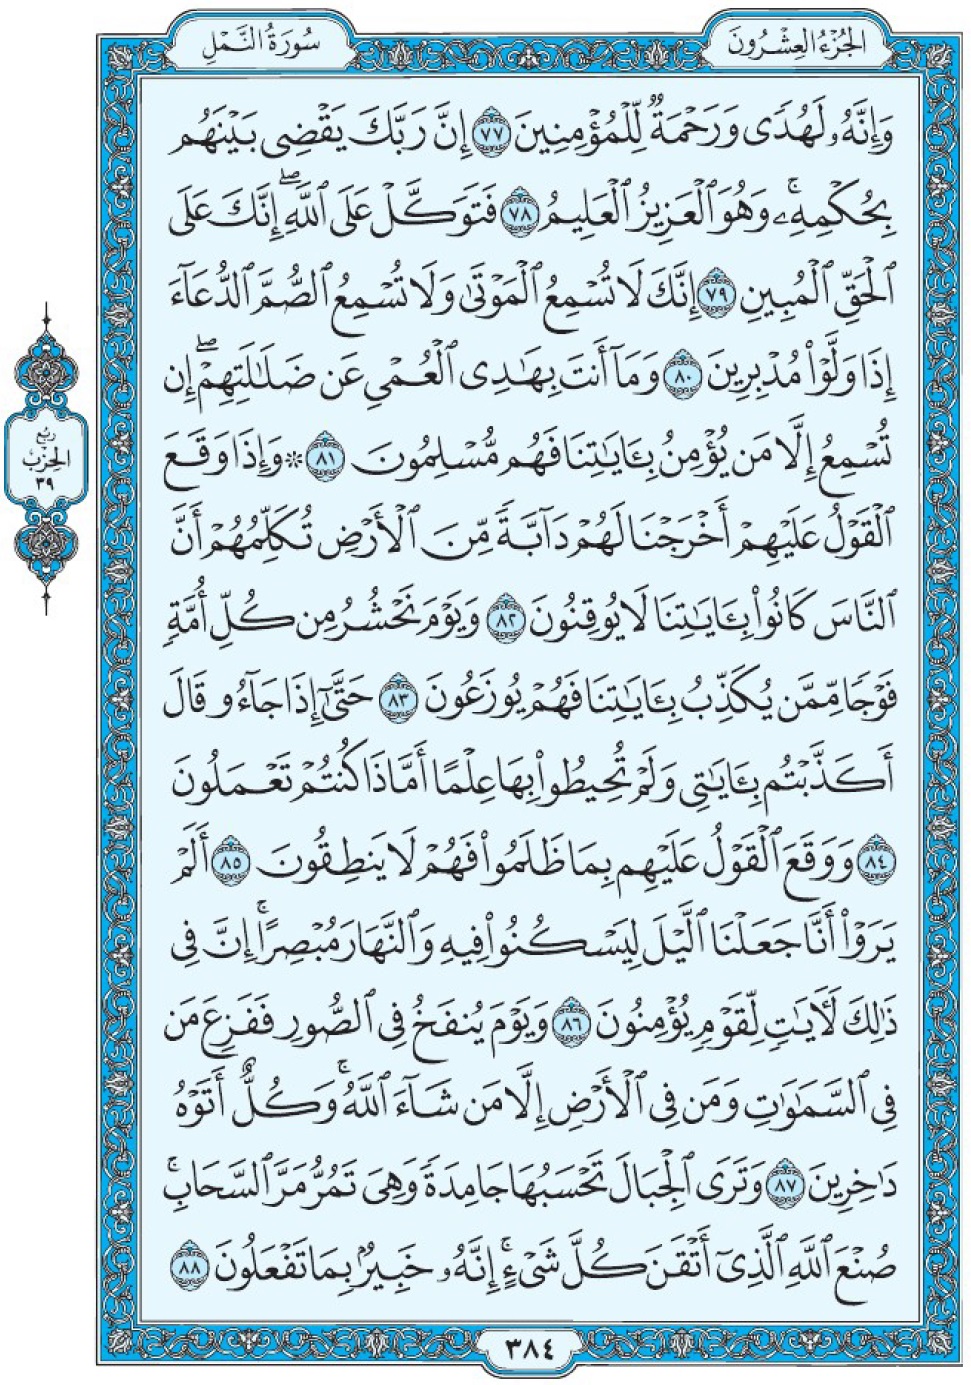 Коран Мединский мусхаф страница 384, Ан-Намль, аят 77-88